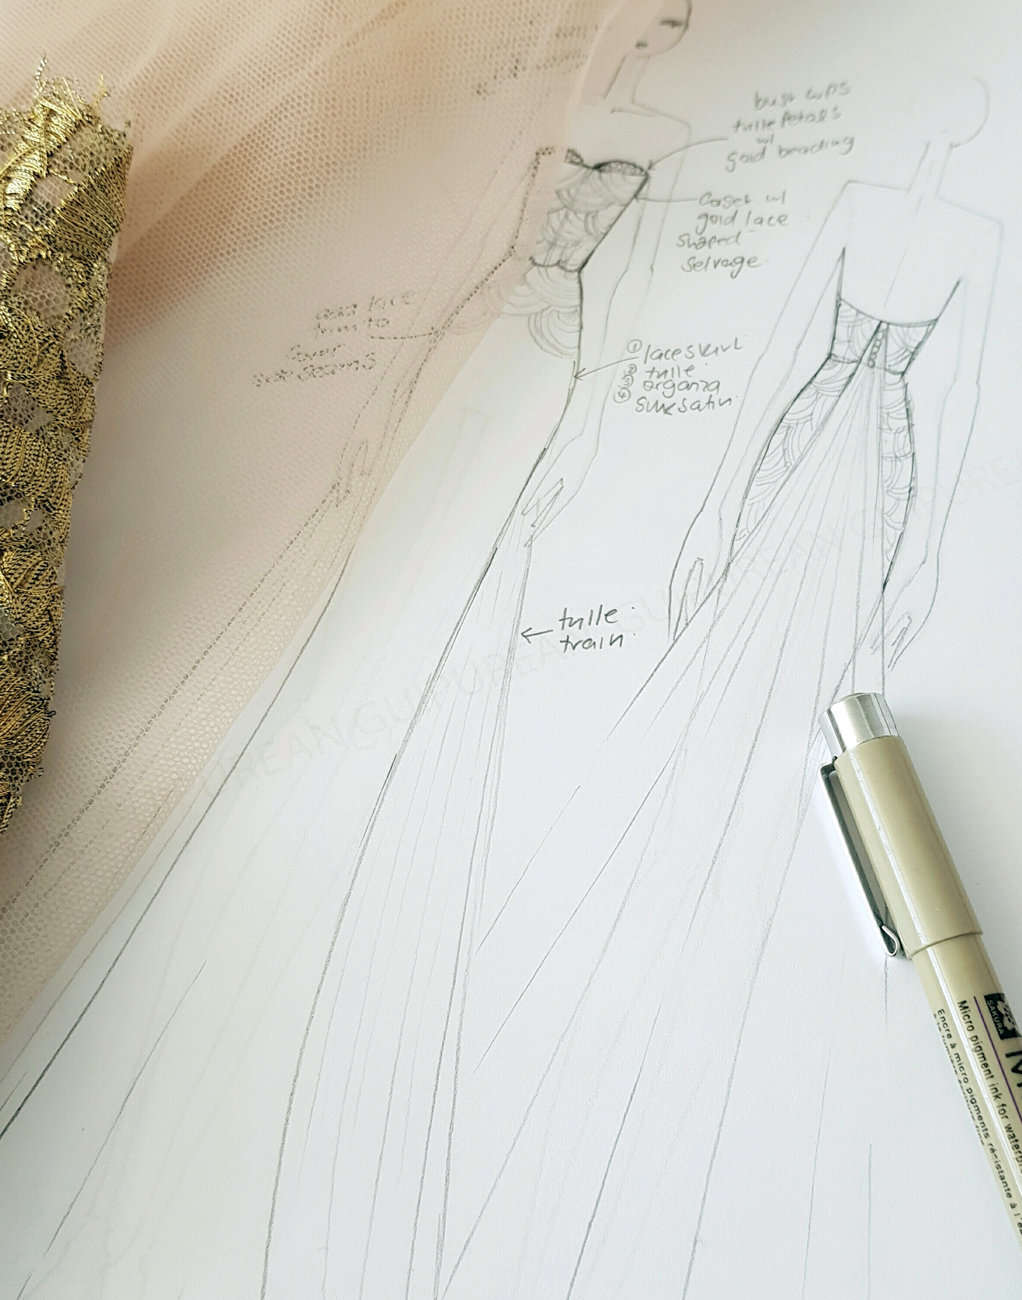 Dress Designing Process - Sketch